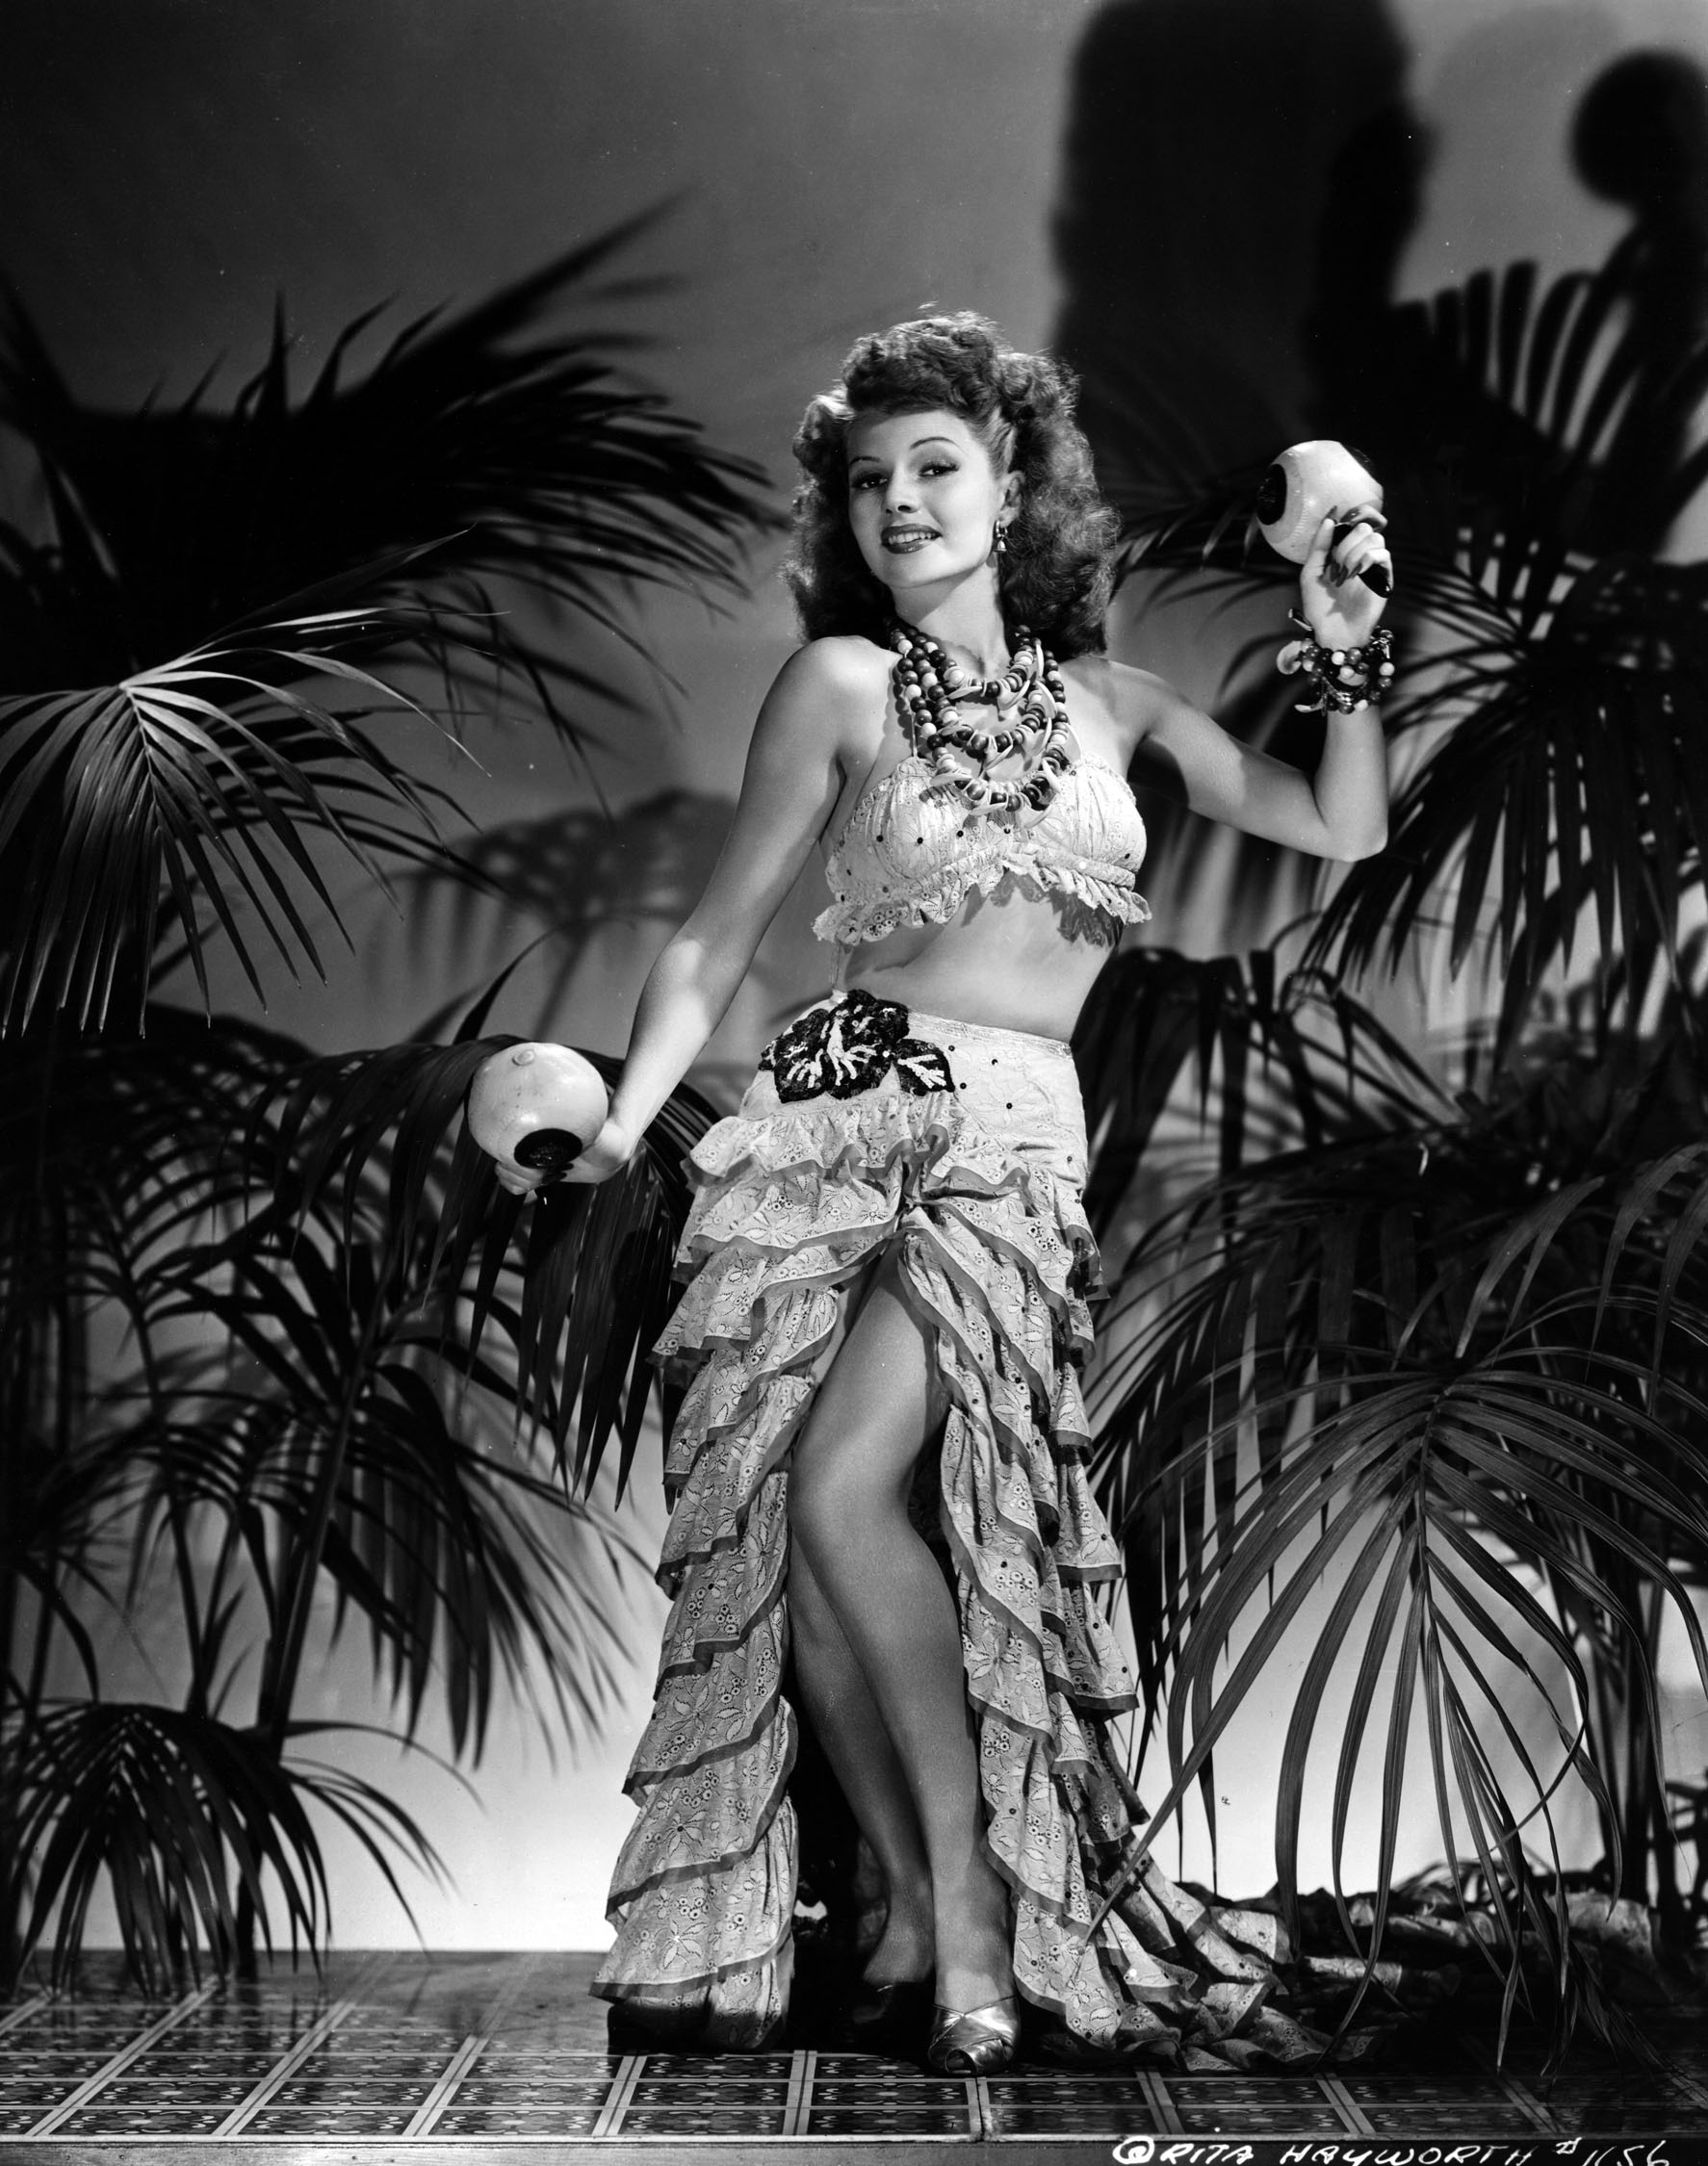 Columbia publicity still of Rita Hayworth dancing, circa 1941.